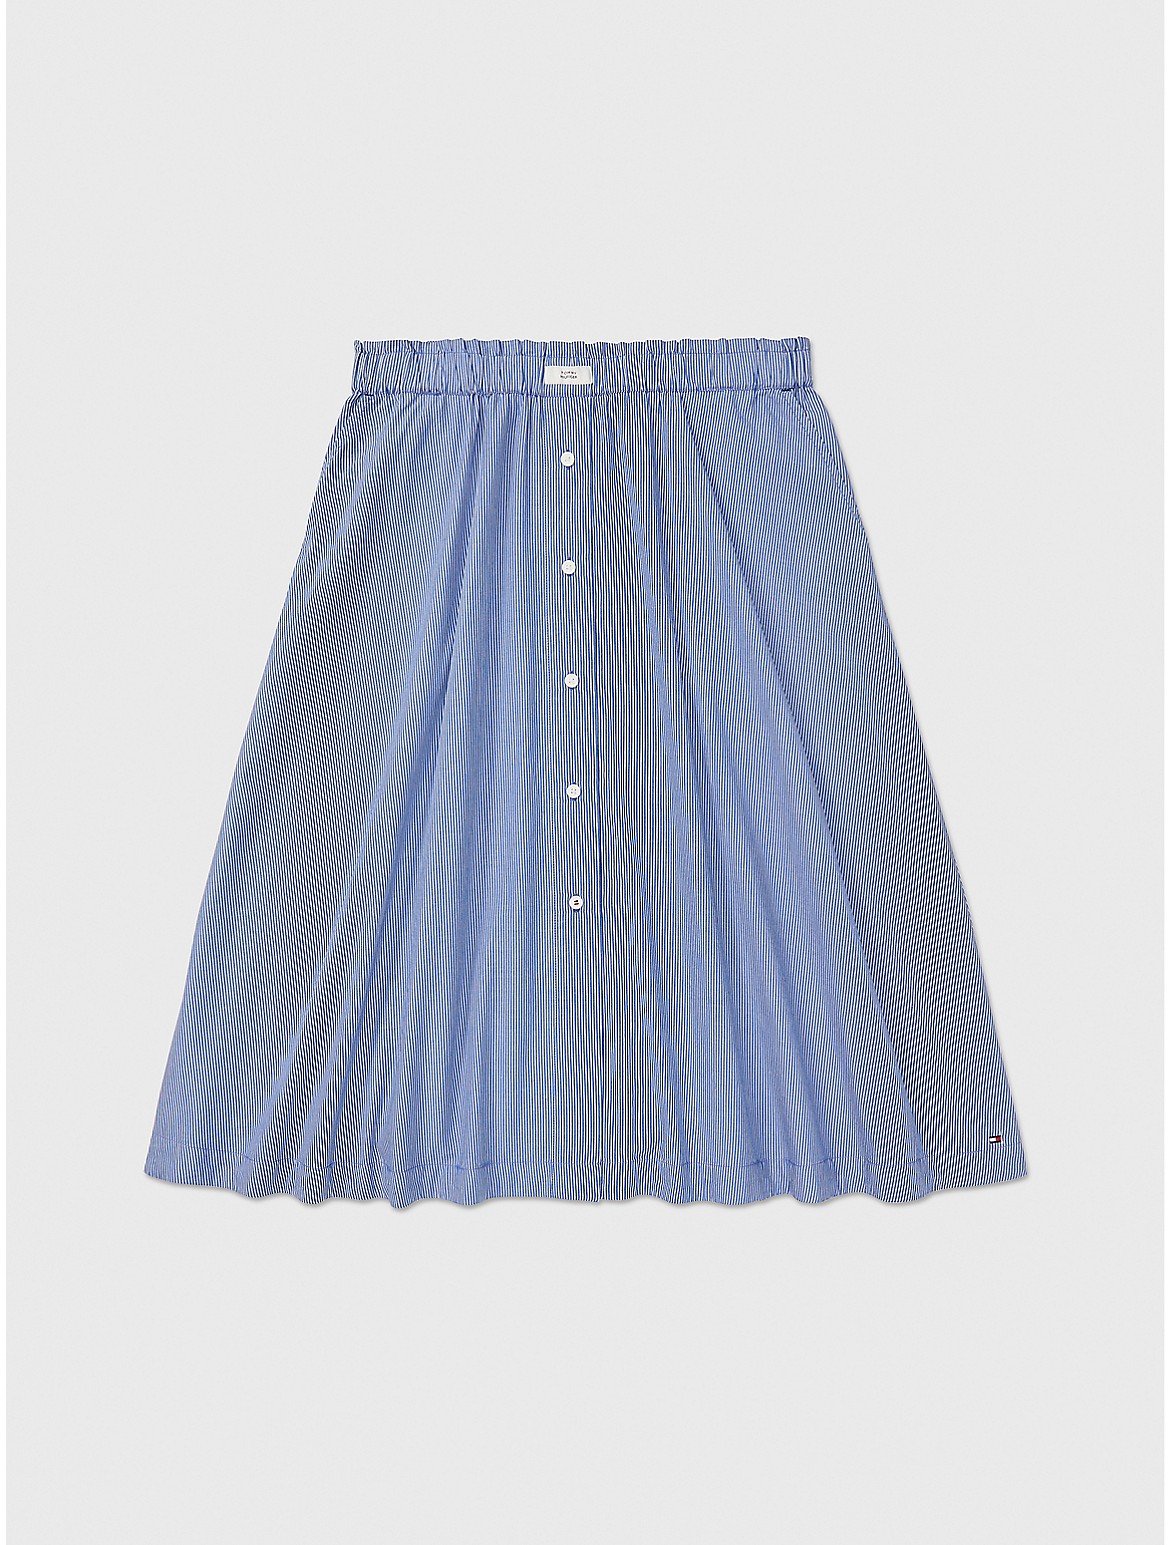 Tommy Hilfiger Women's Stripe Pull-On Skirt - Blue - L